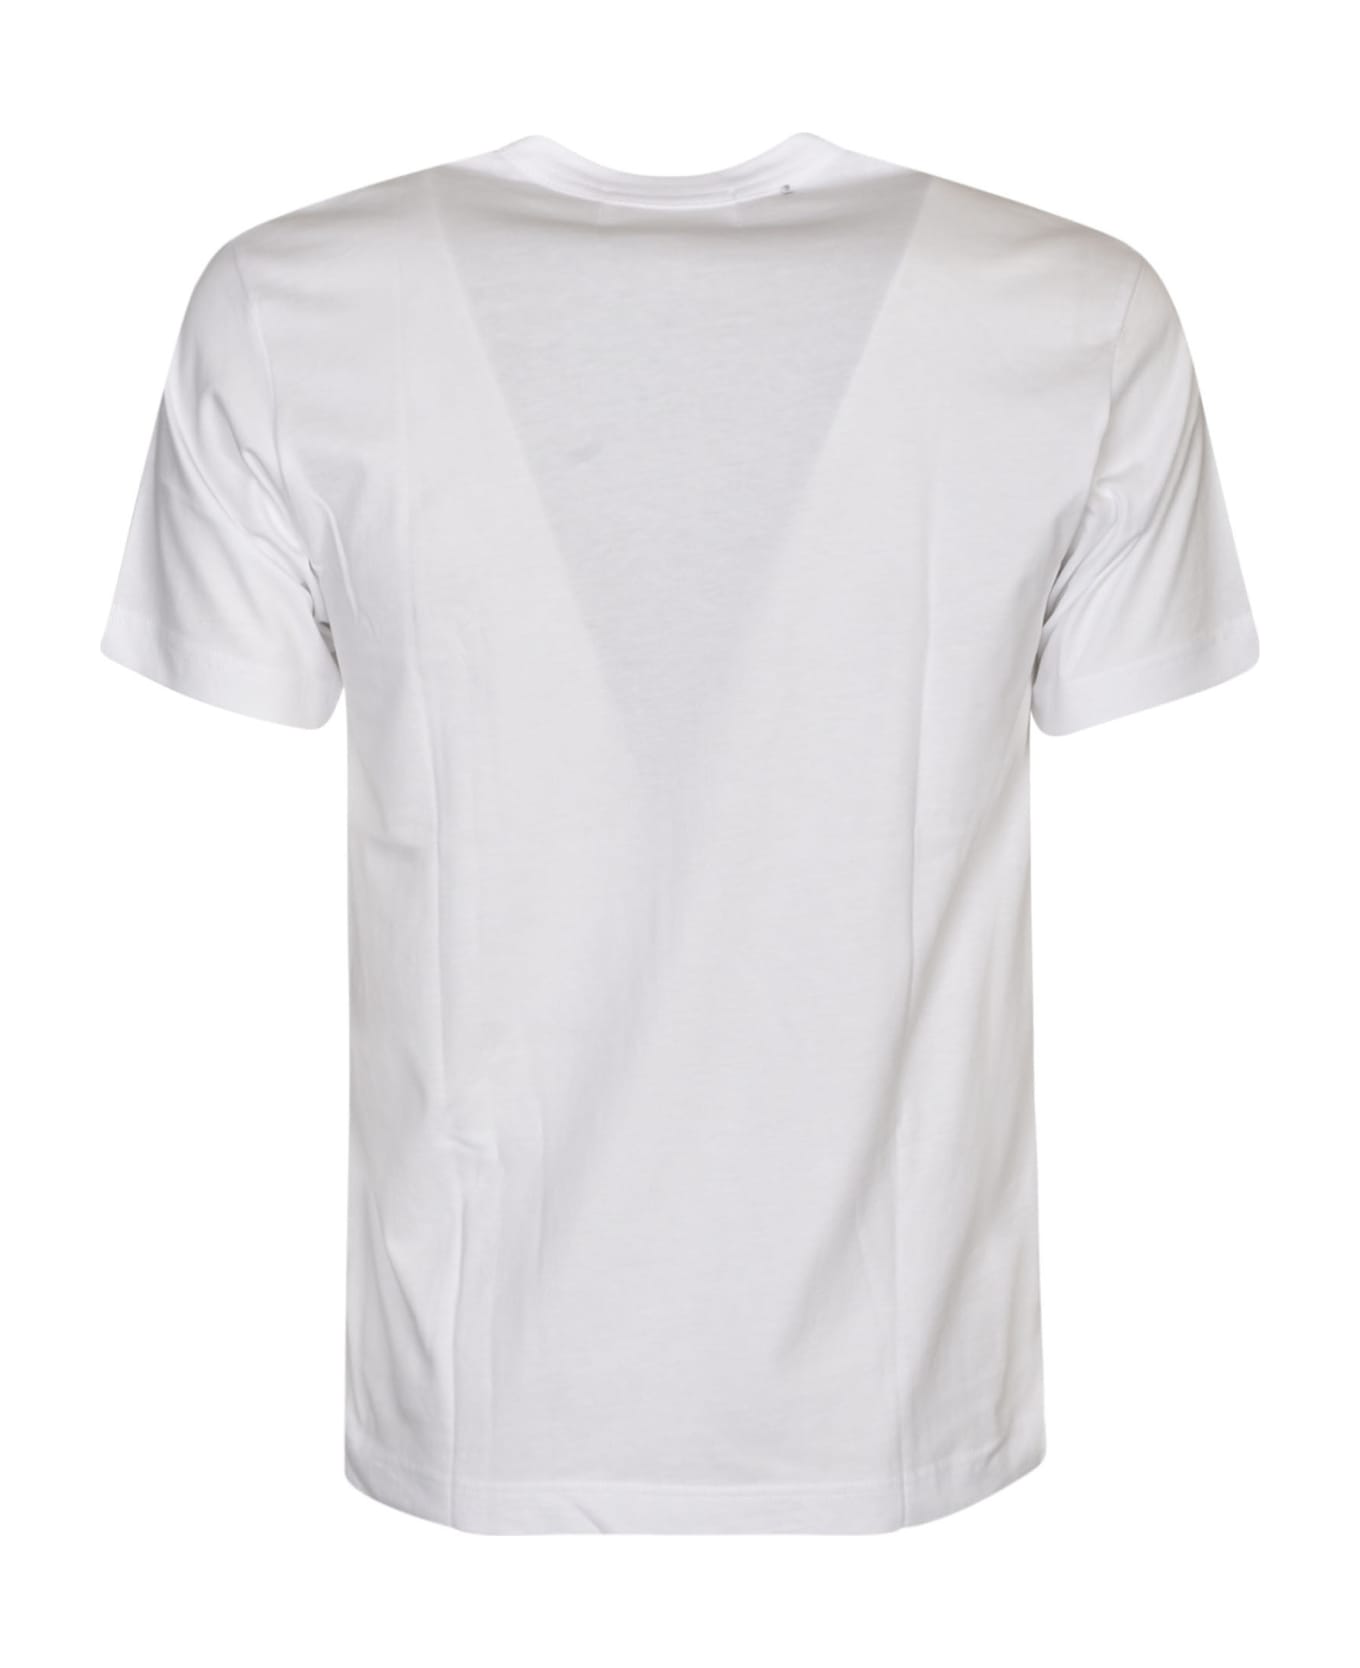 Comme des Garçons Croco Embroidered T-shirt - White